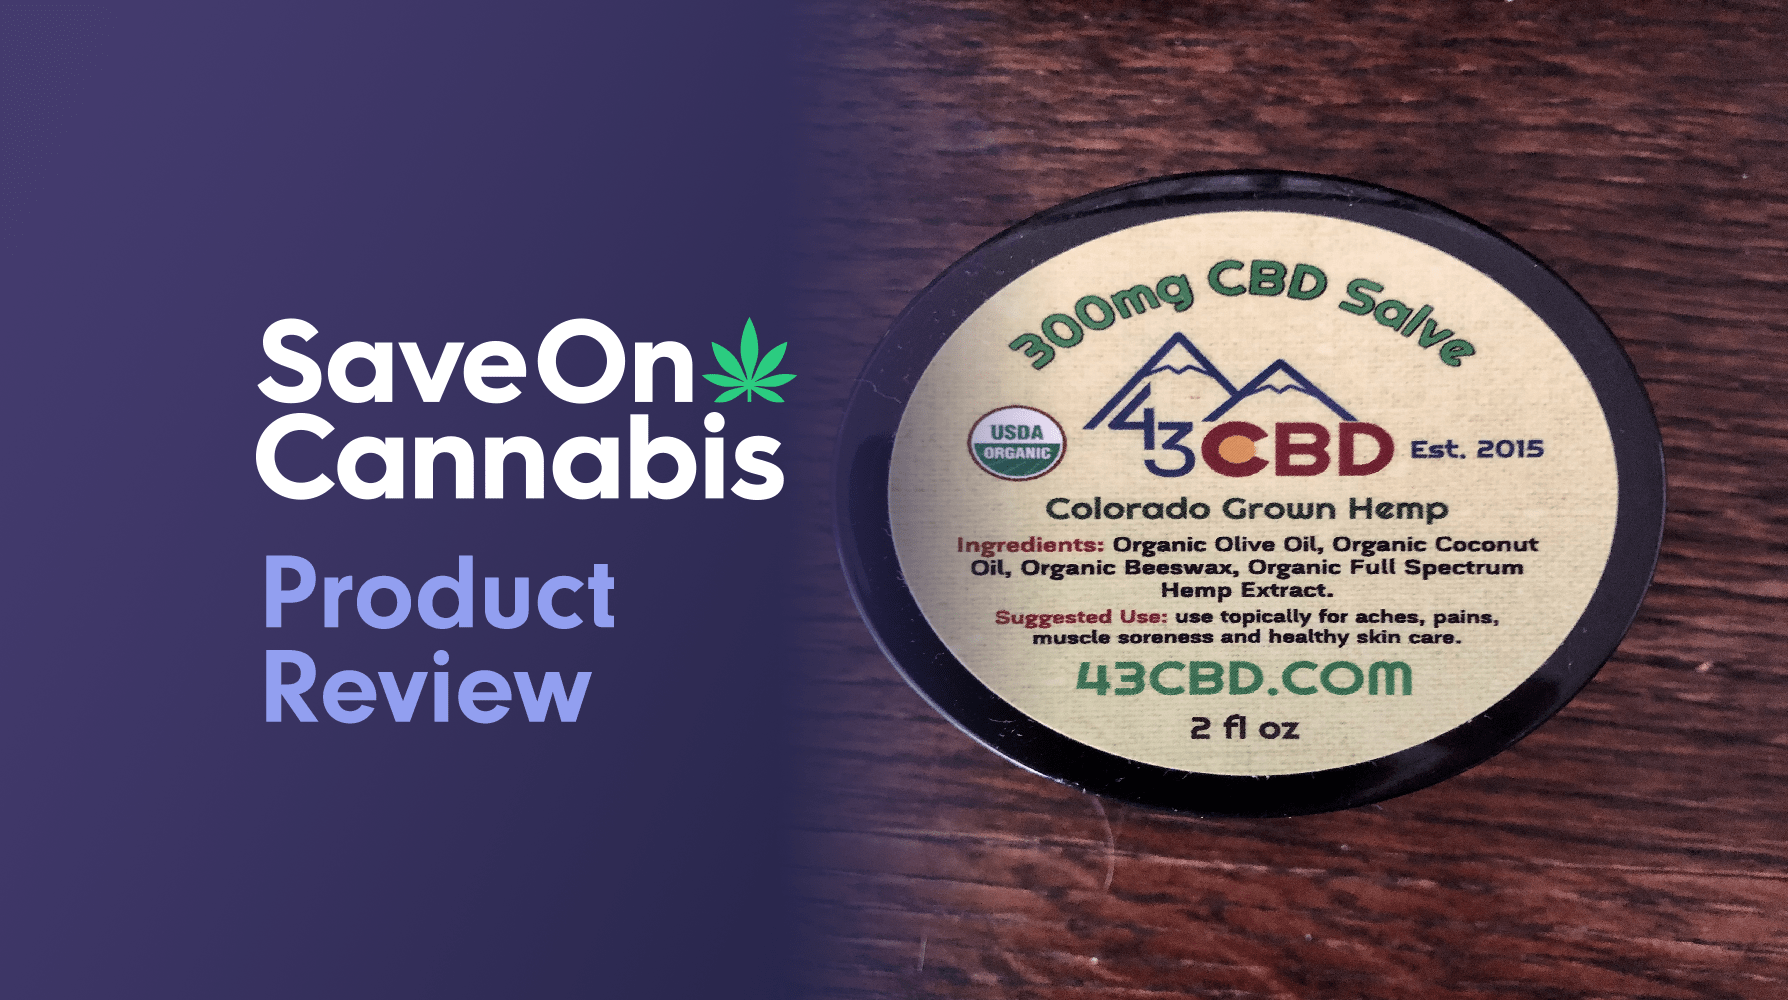 43 CBD Organic CBD Oil Salve 300mg Save On Cannabis Review Website